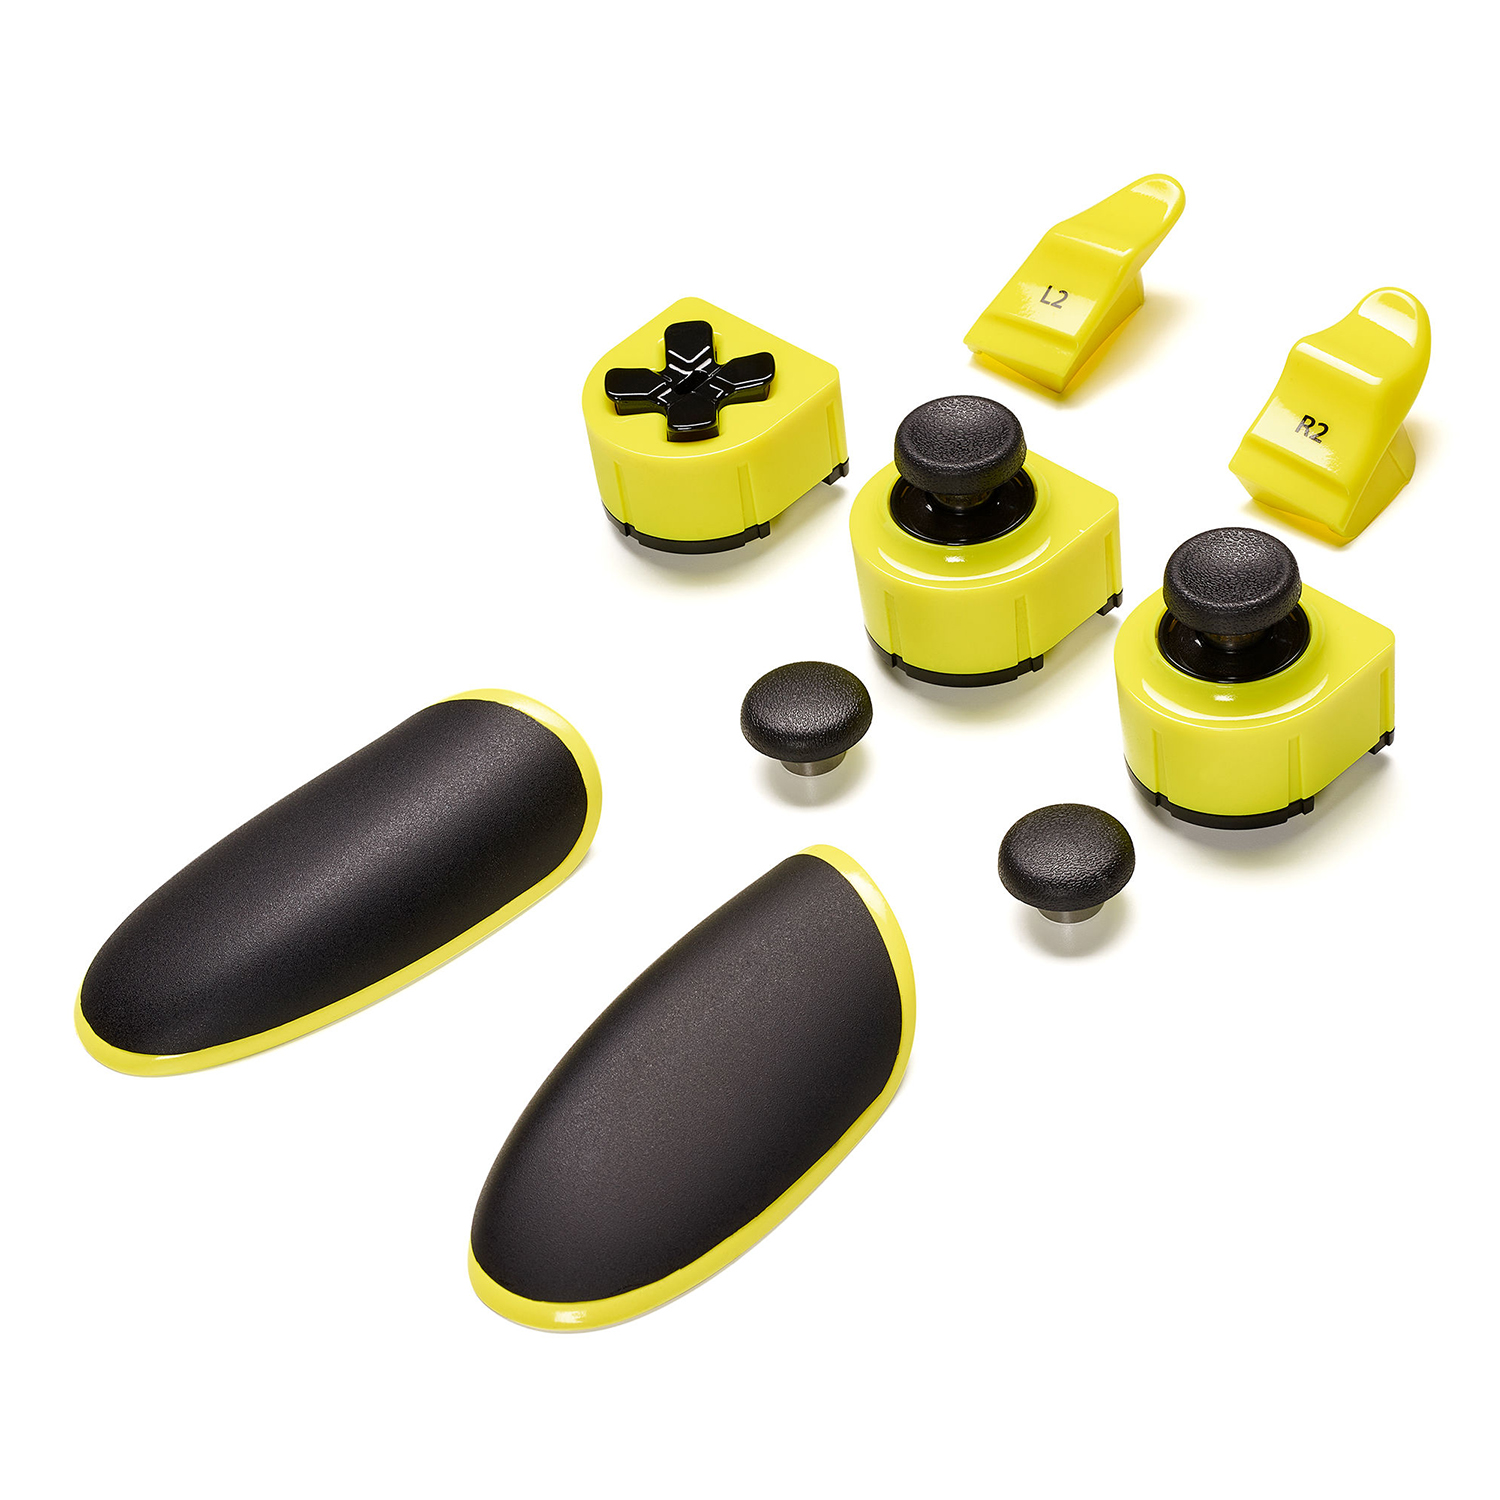 Комплект модулей Thrustmaster Eswap yellow color pack emea, PS4, ПК